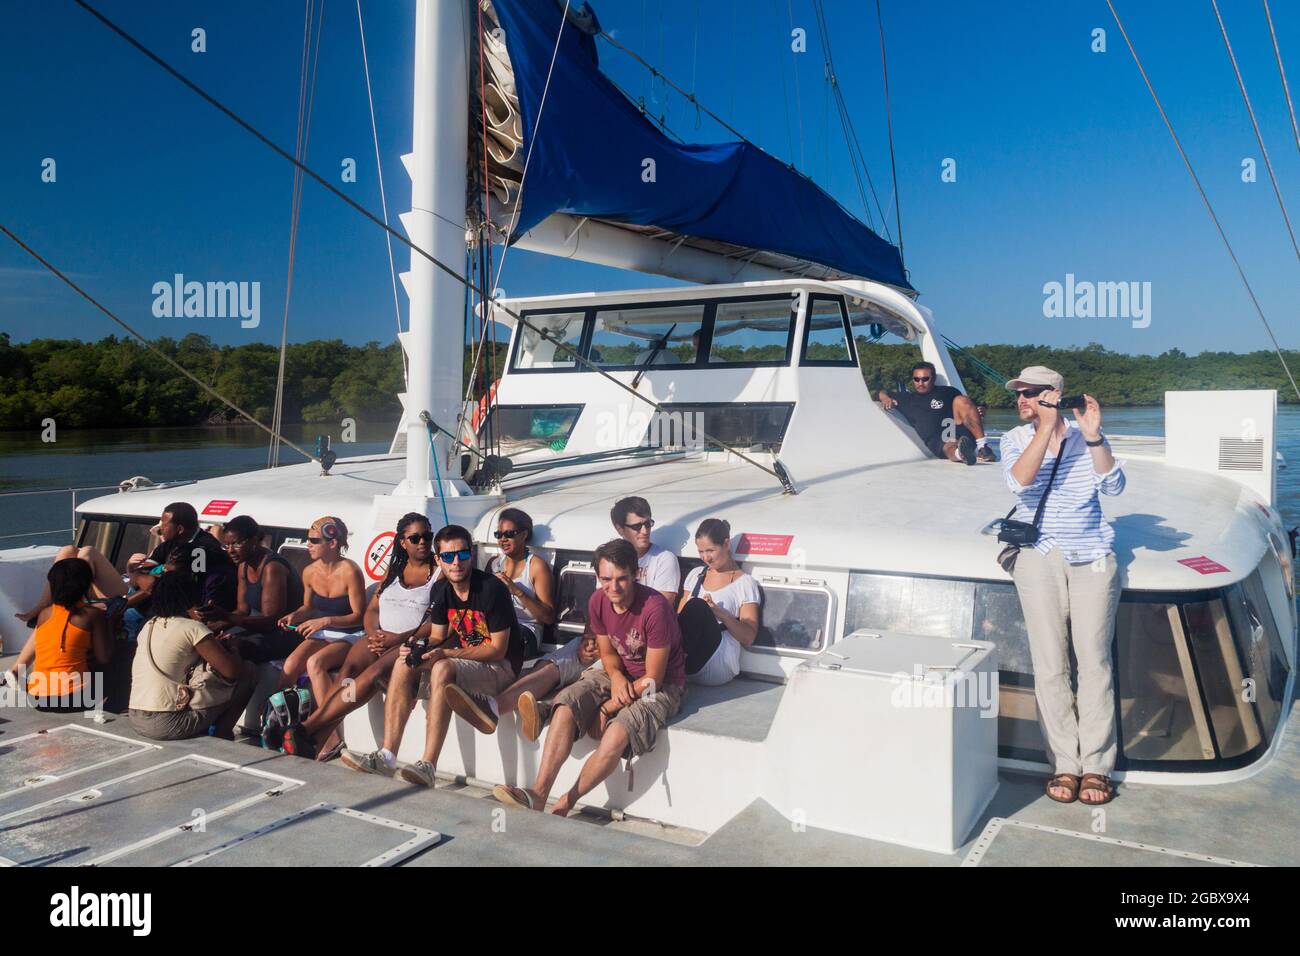 KOUROU, FRENCH GUIANA - AUGUST 2, 2015: Tourists aboard modern catamaran on their way to Iles du Salut (Islands of Salvation) in French Guiana. Stock Photo